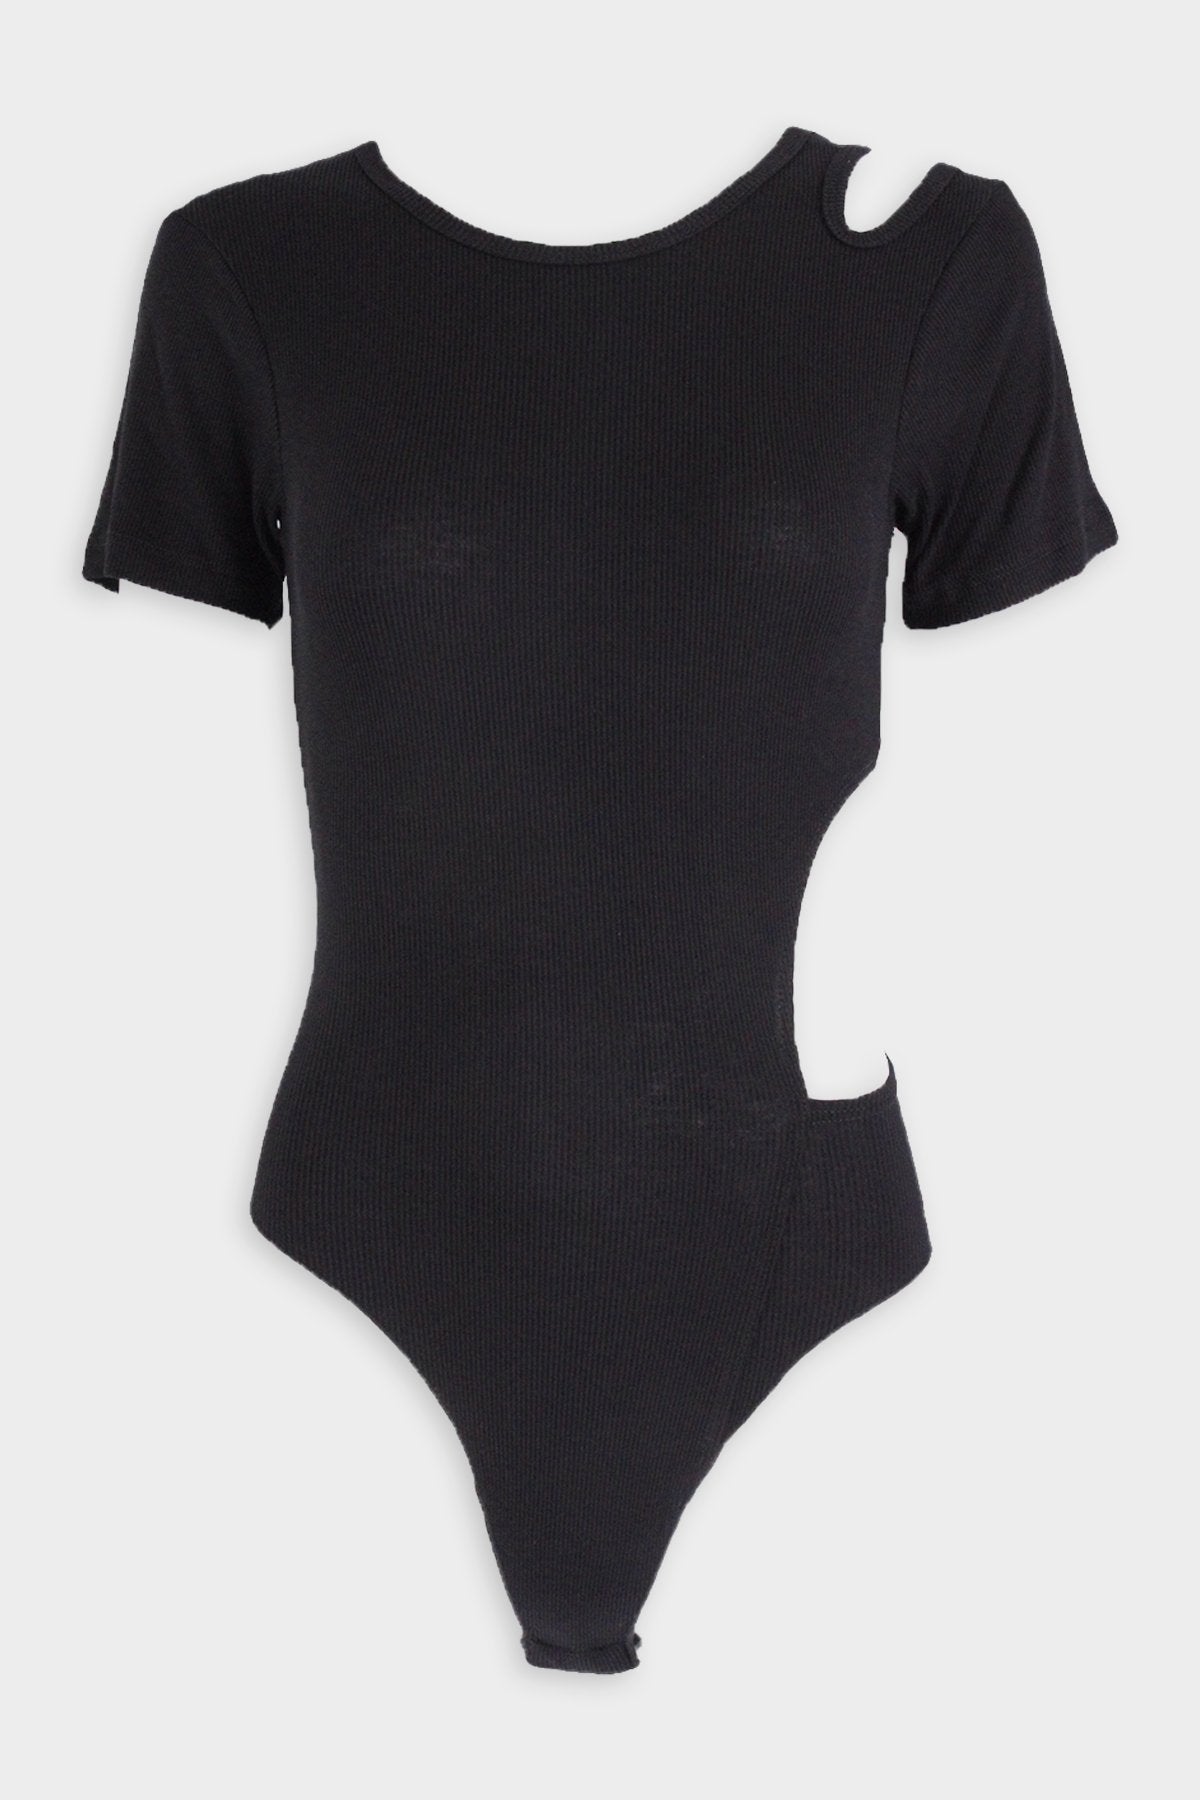 Teather Rib Bodysuit in Black - shop-olivia.com